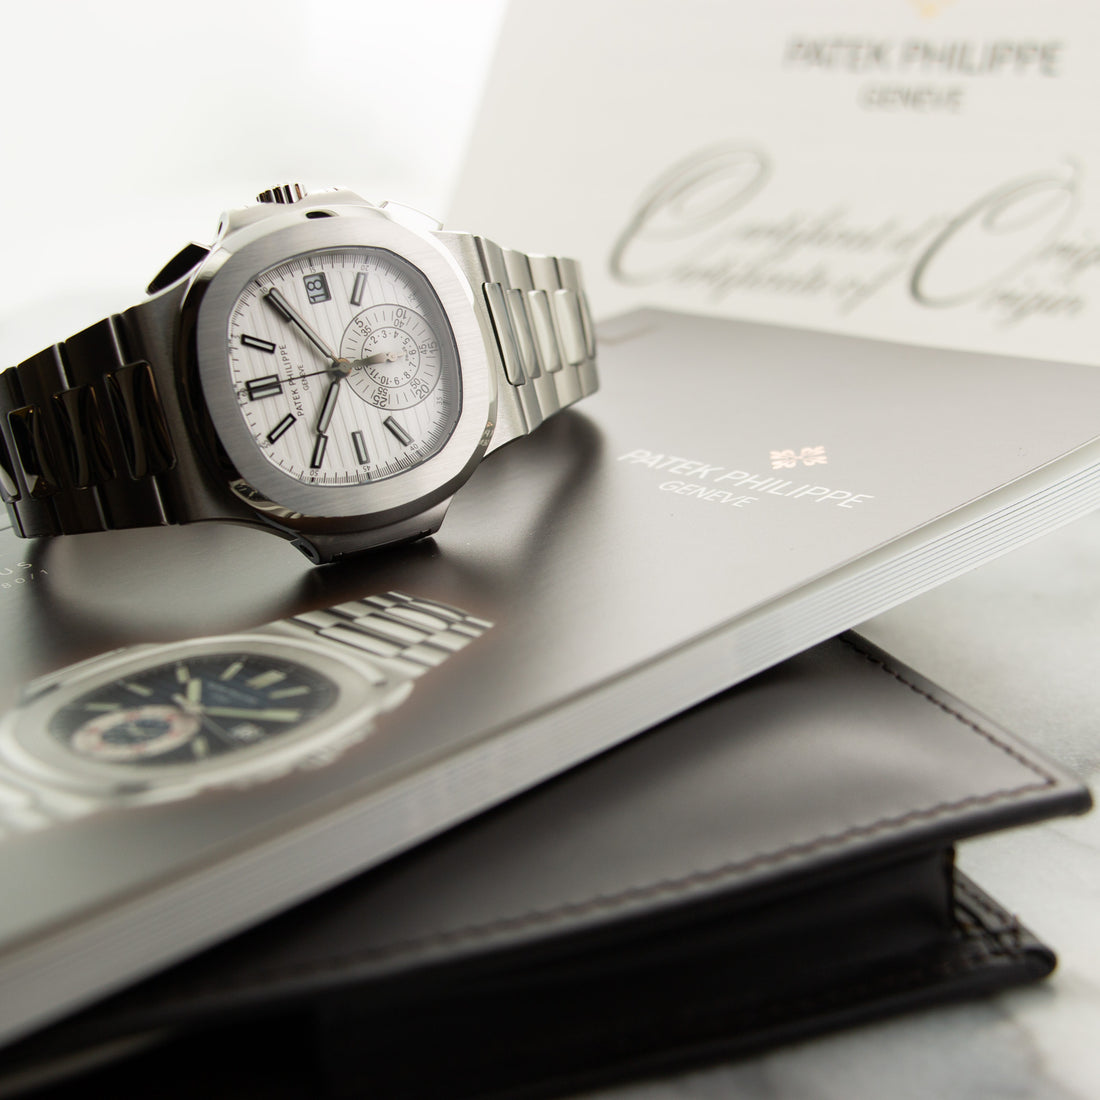 Patek Philippe Nautilus Chronograph Watch Ref. 5980